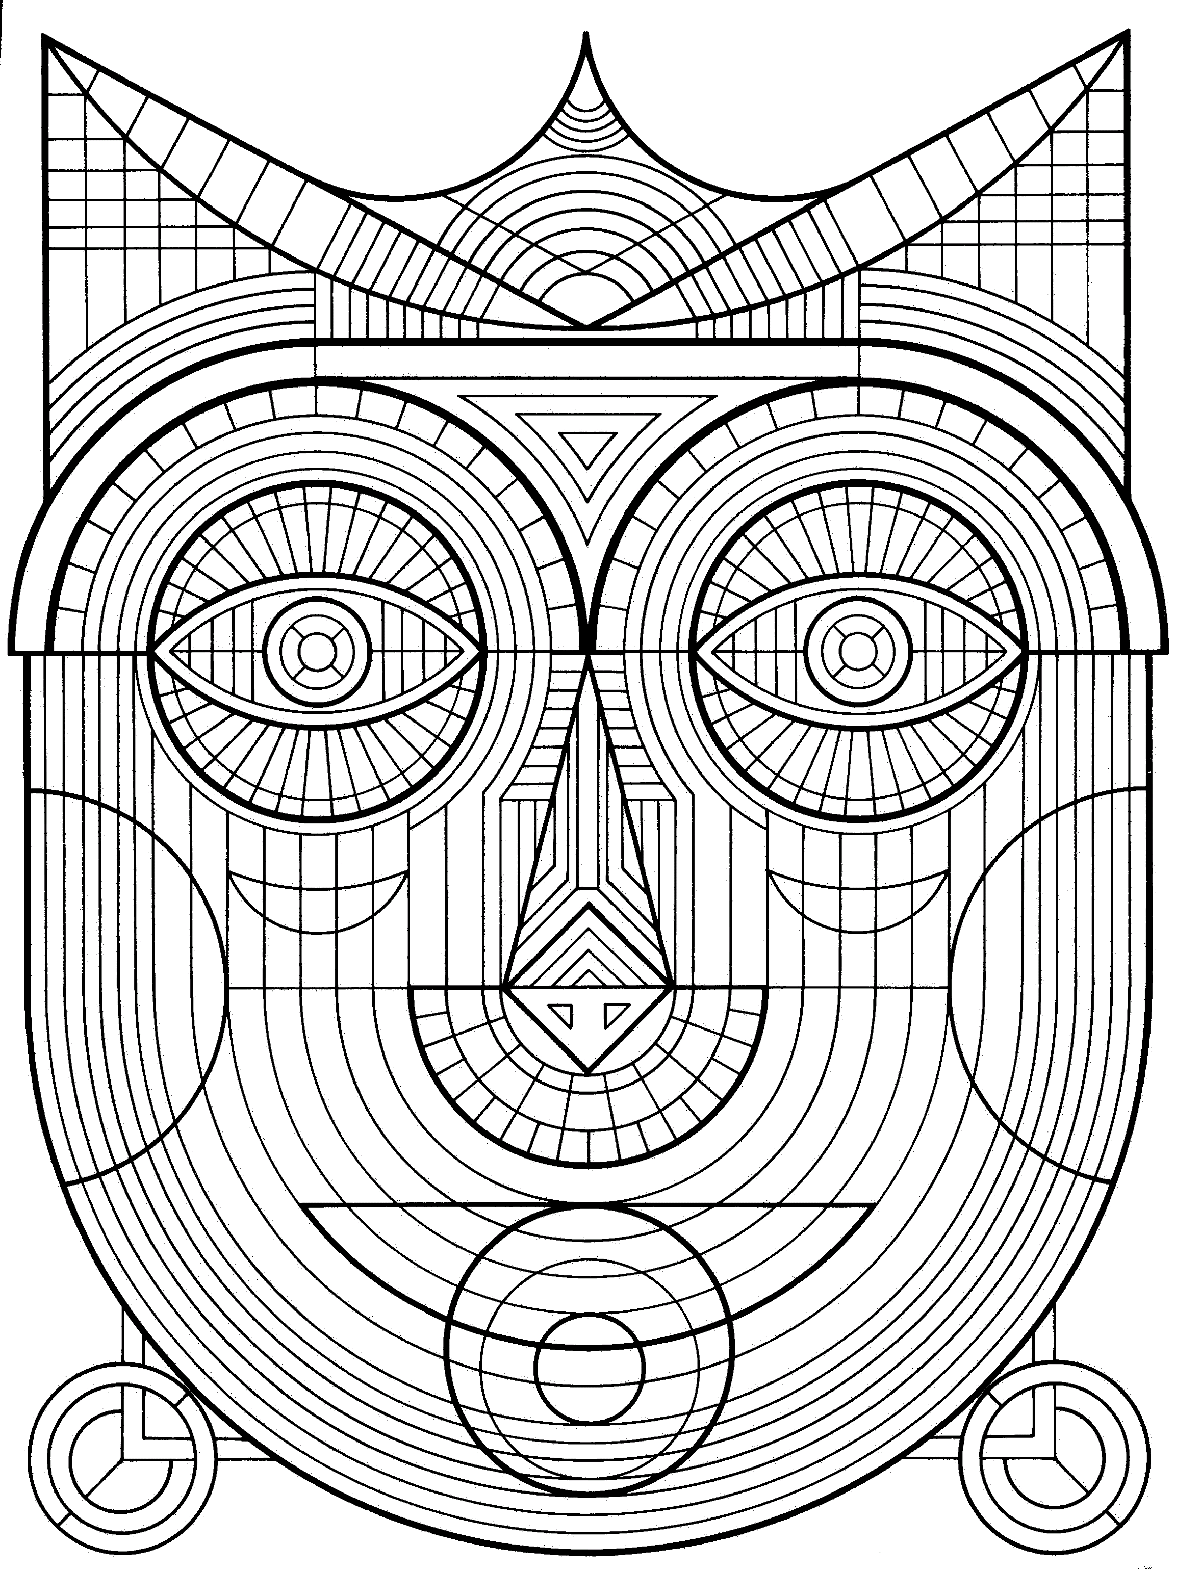 Image of a look-alike Mayan mask